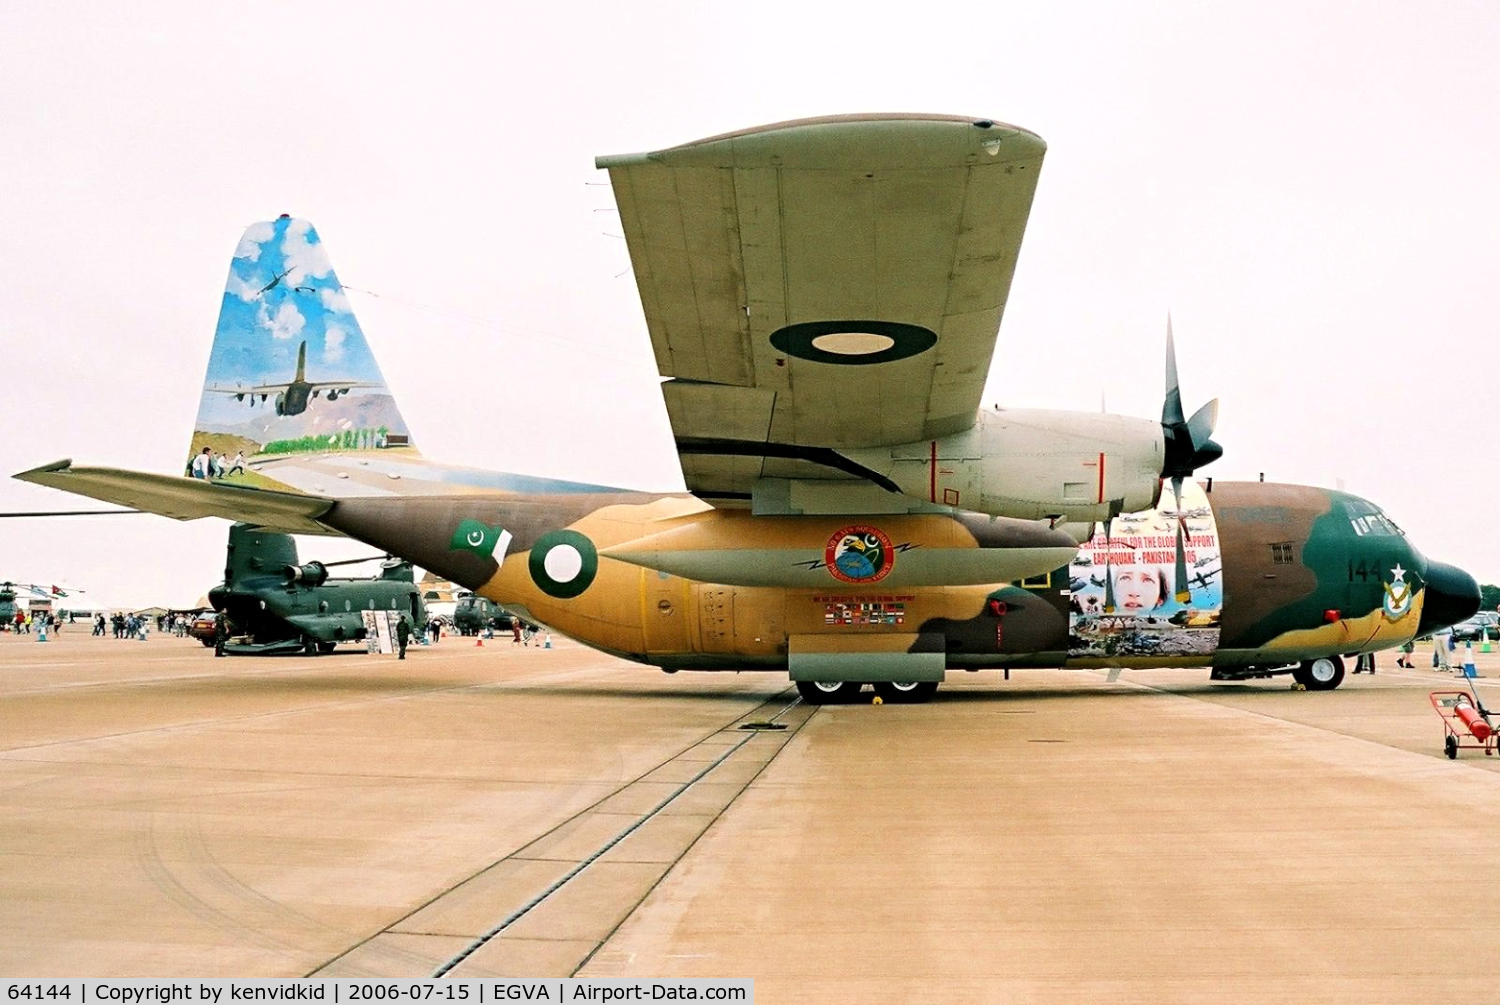 64144, Lockheed L-100-20 Hercules C/N 382-4144, Pakistan Air Force special scheme.